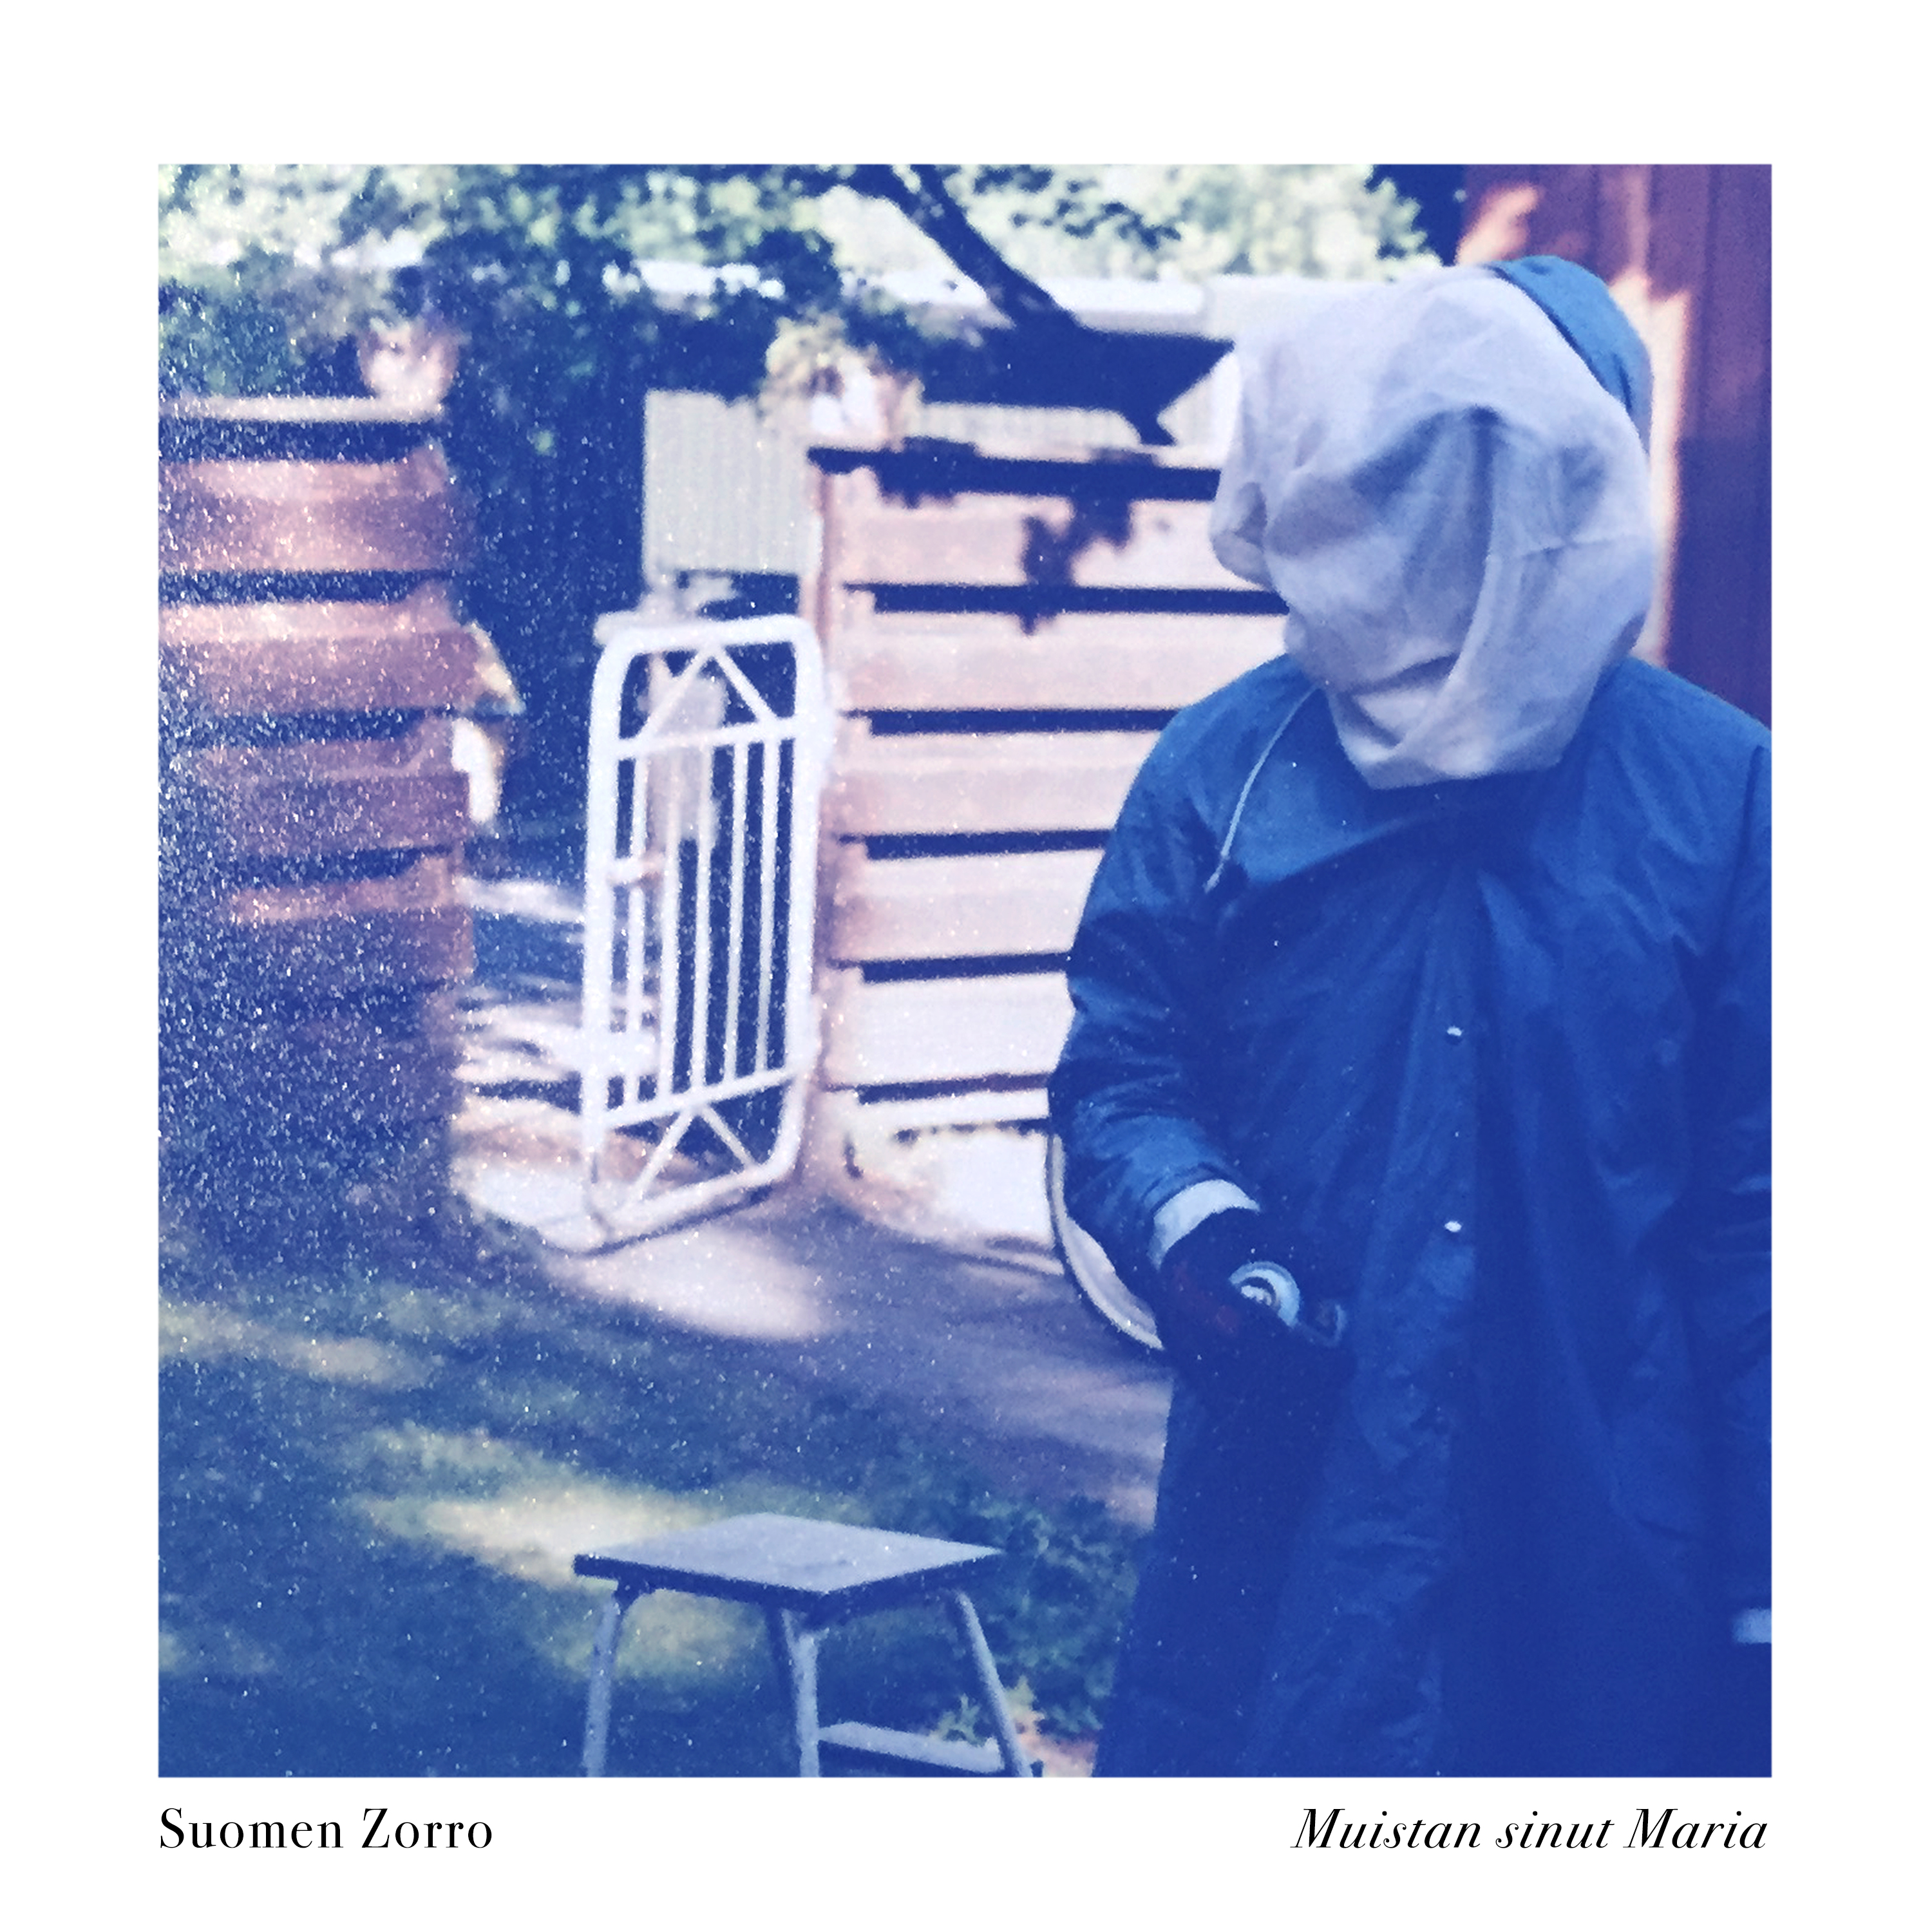 Suomen Zorron debyyttialbumi on julkaistu